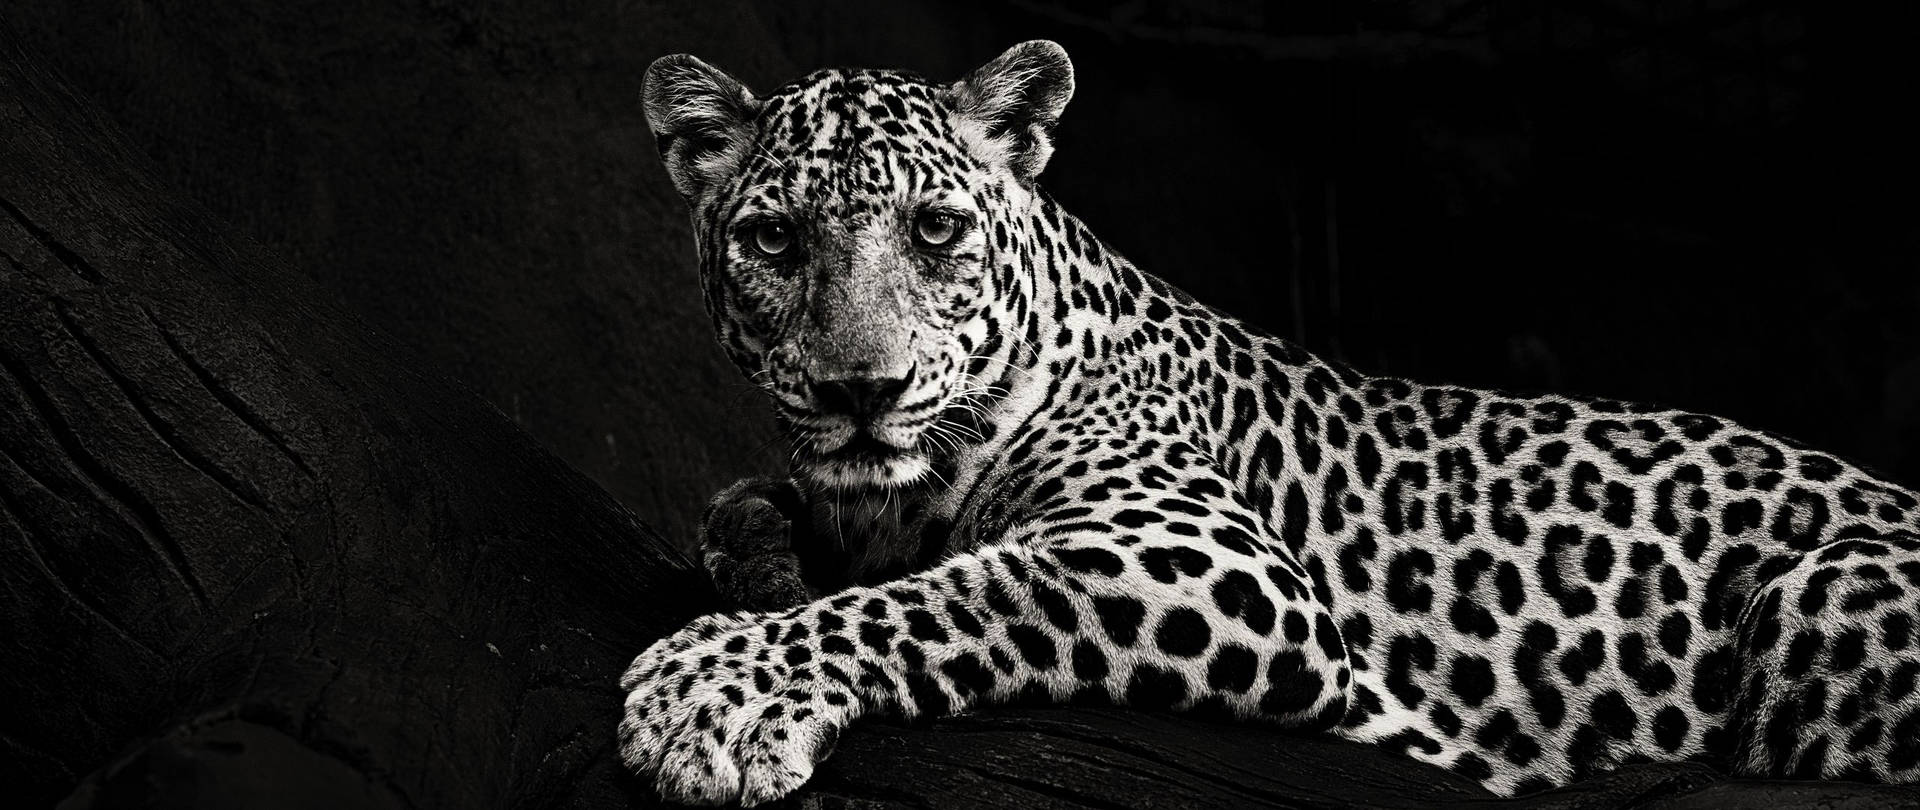 Monochrome Jaguar Wallpaper